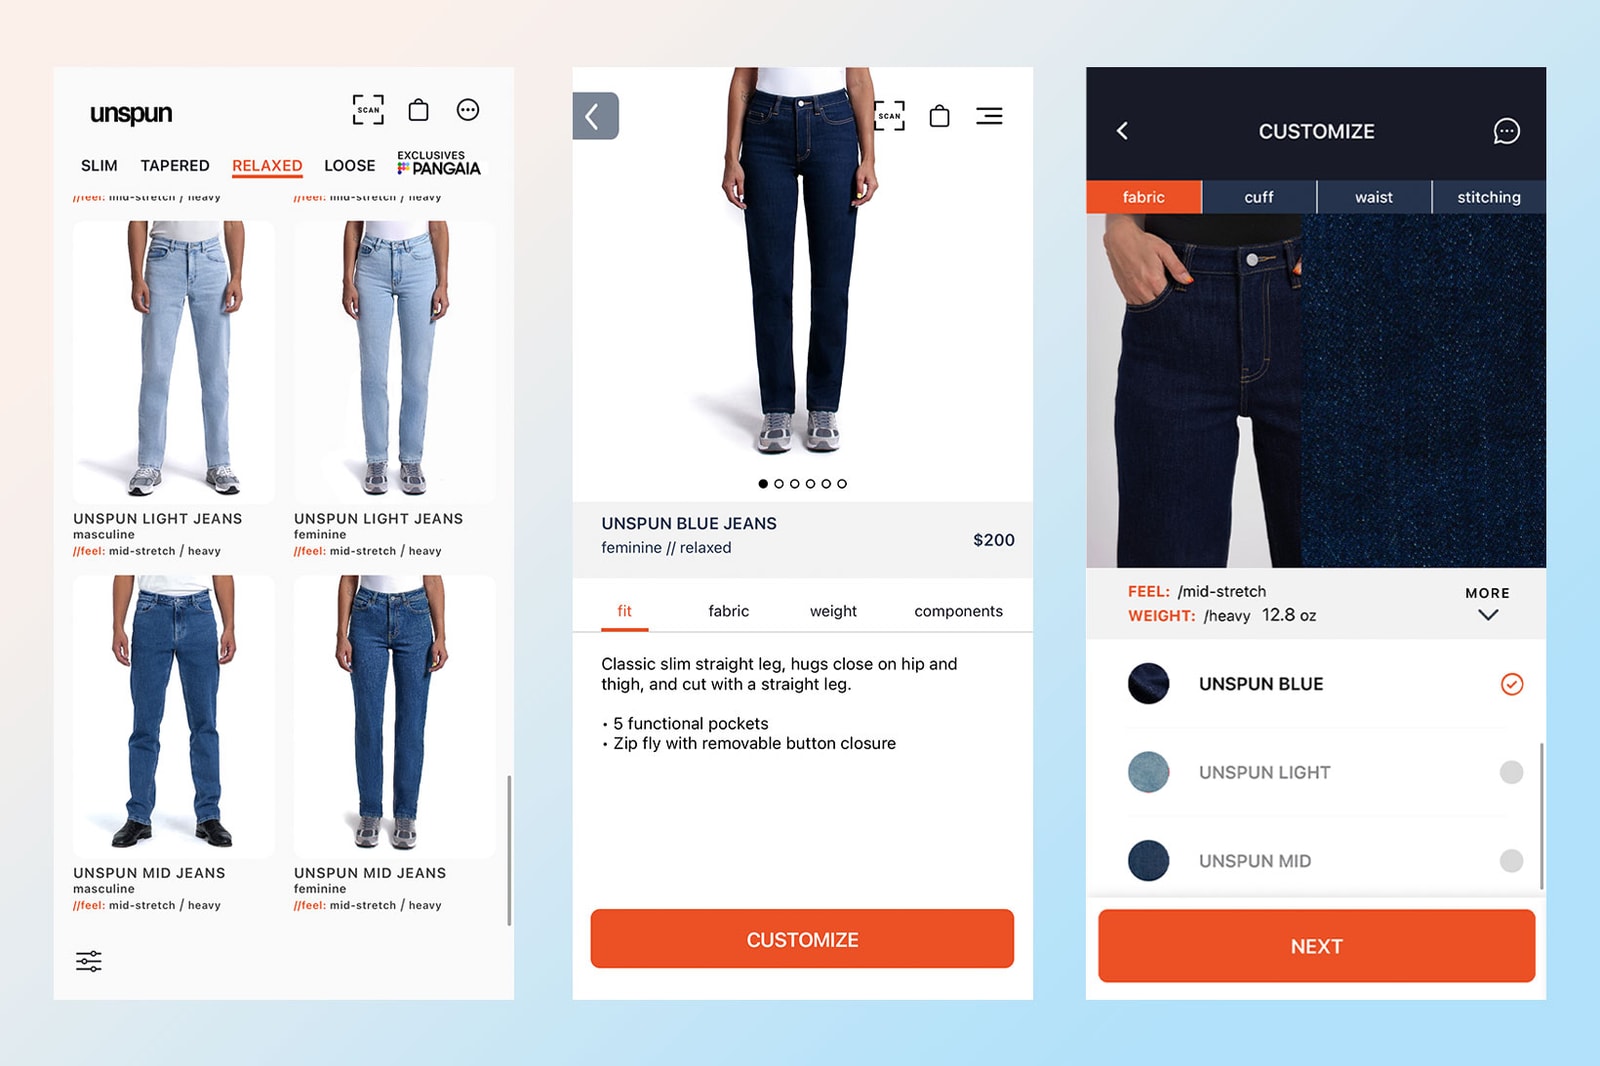 unspun Customized Jeans Denim 3D Body Scanning App Technology Review 